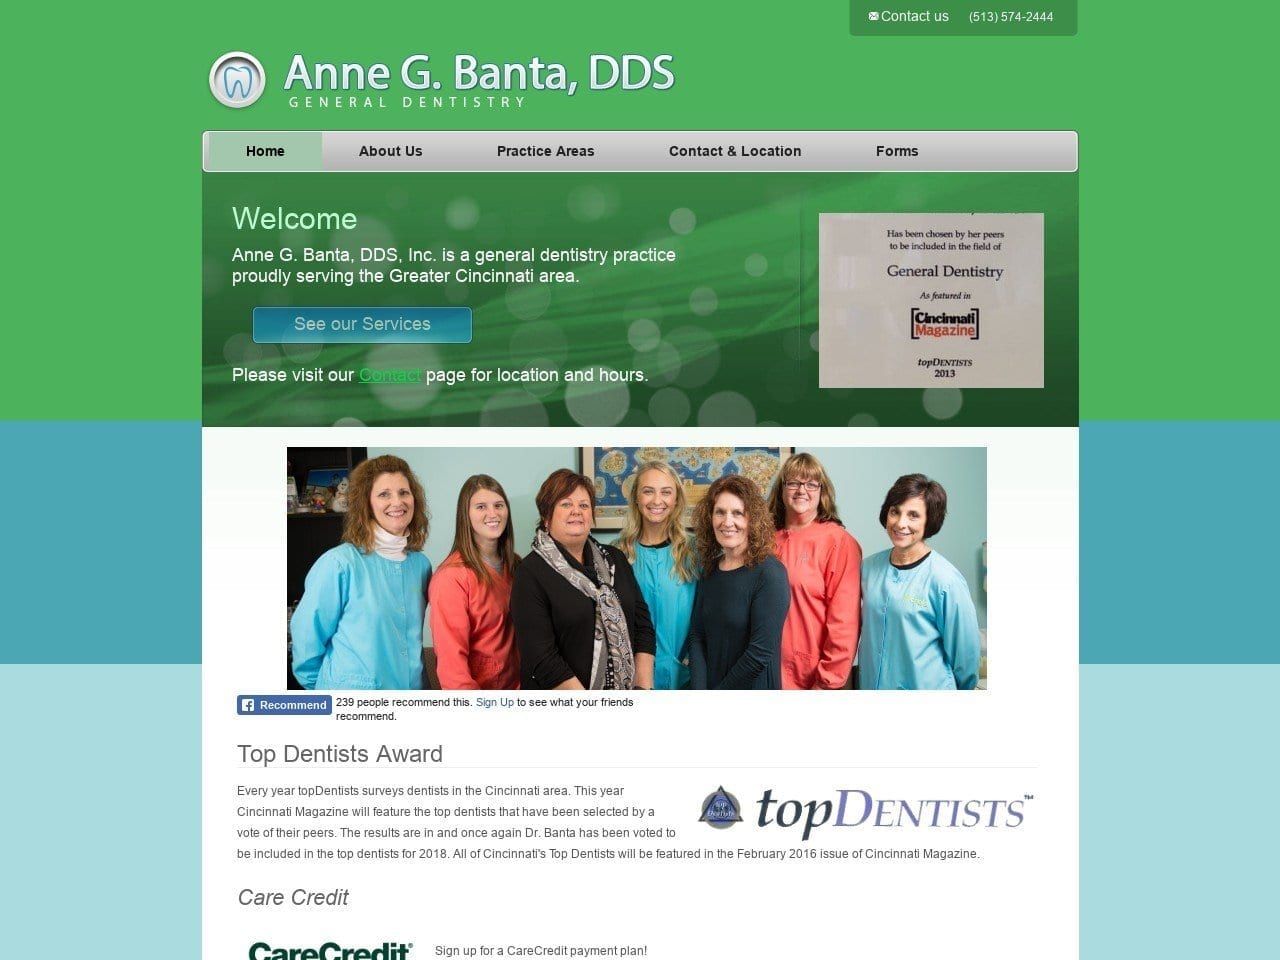 Anne G. Banta DDS Website Screenshot from annebantadds.com